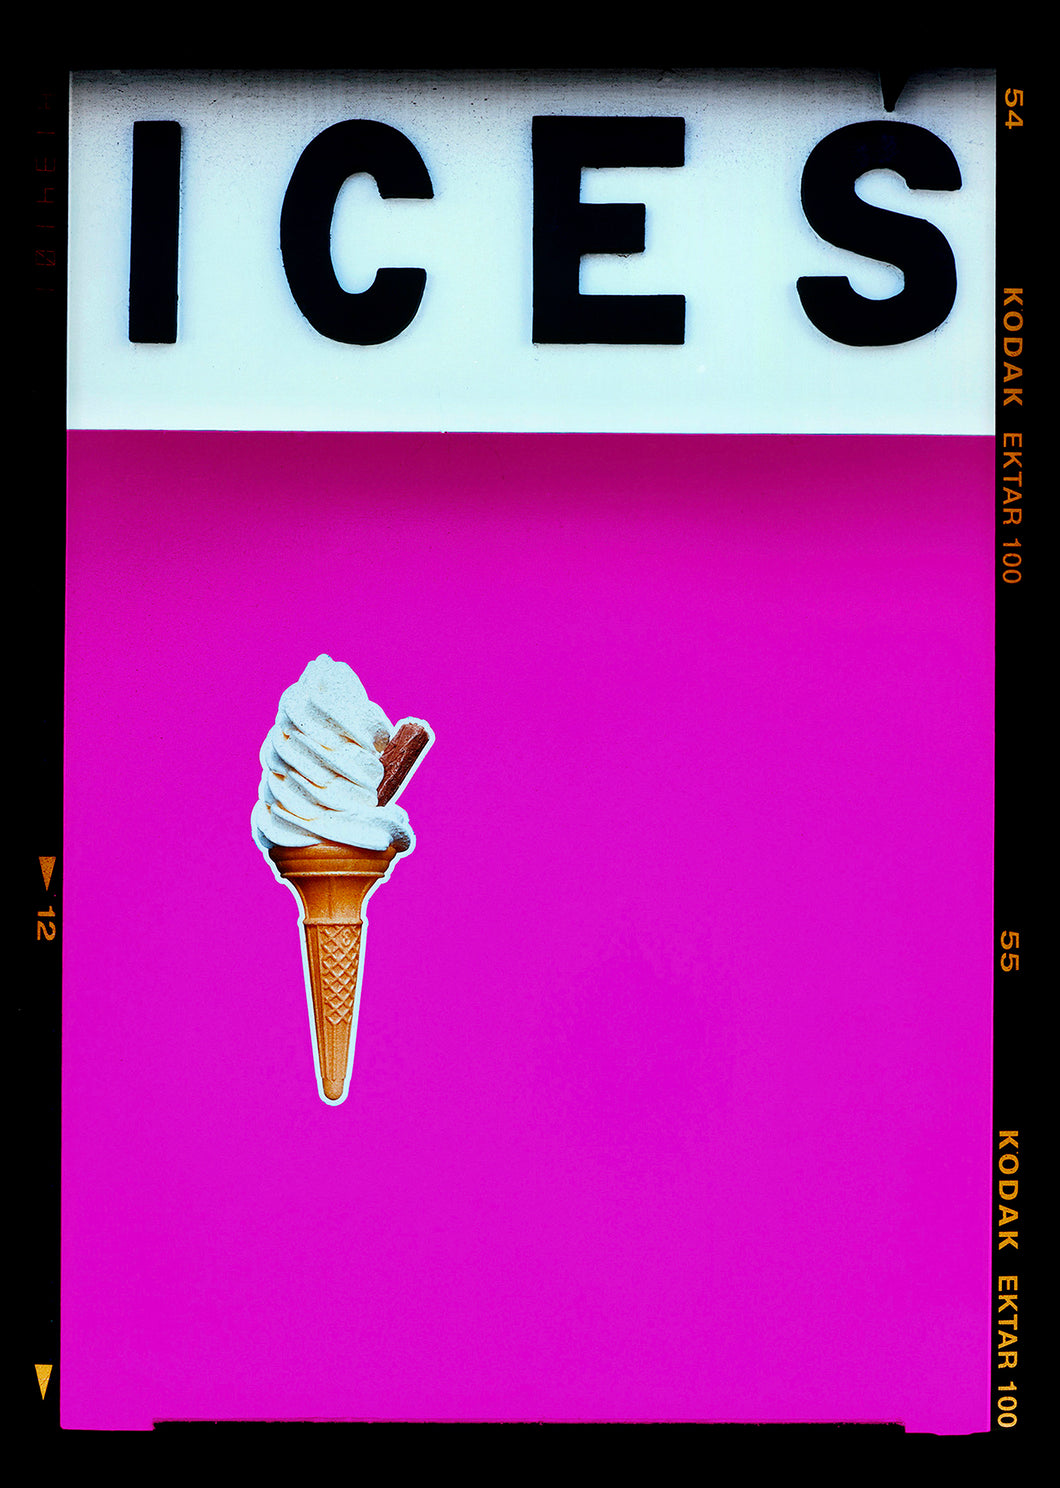 Ices Pink - Richard Heeps 112 x 85cm - XL